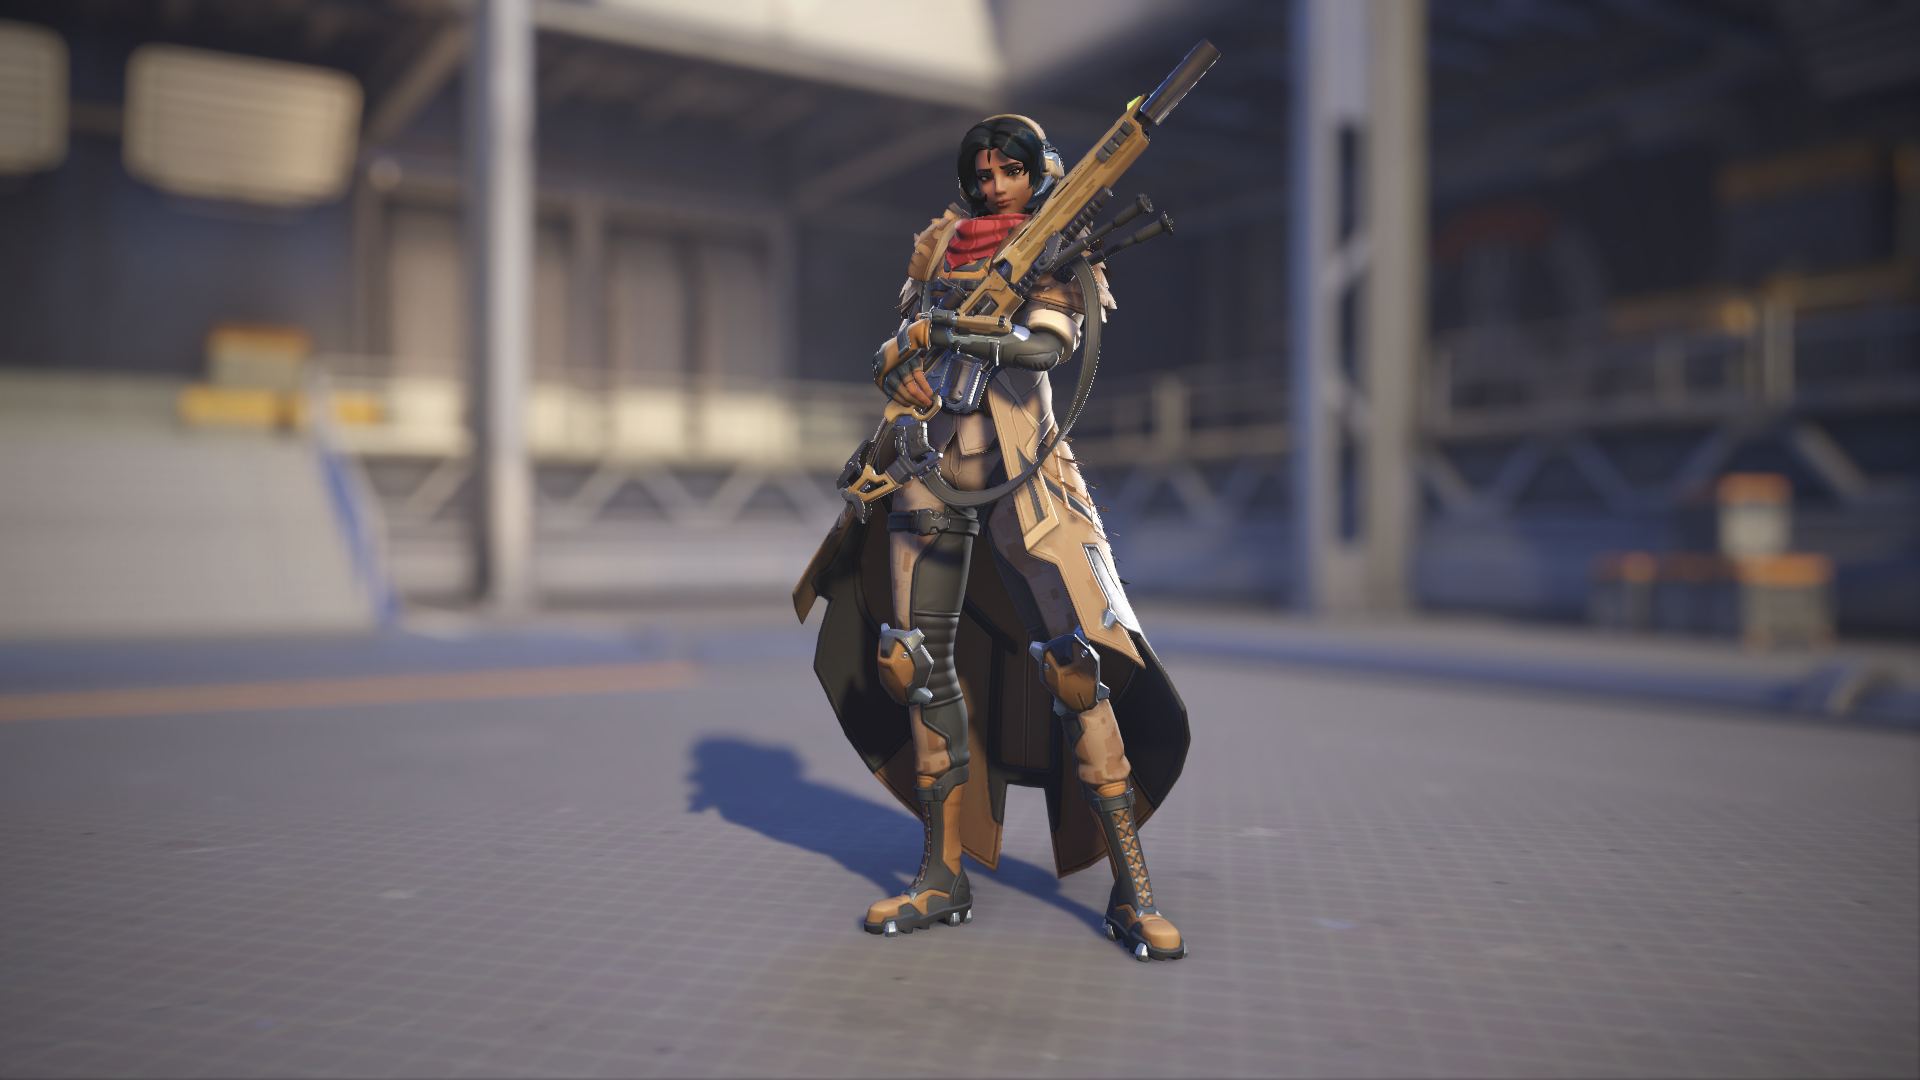 Ana models her Sniper skin in Overwatch 2.